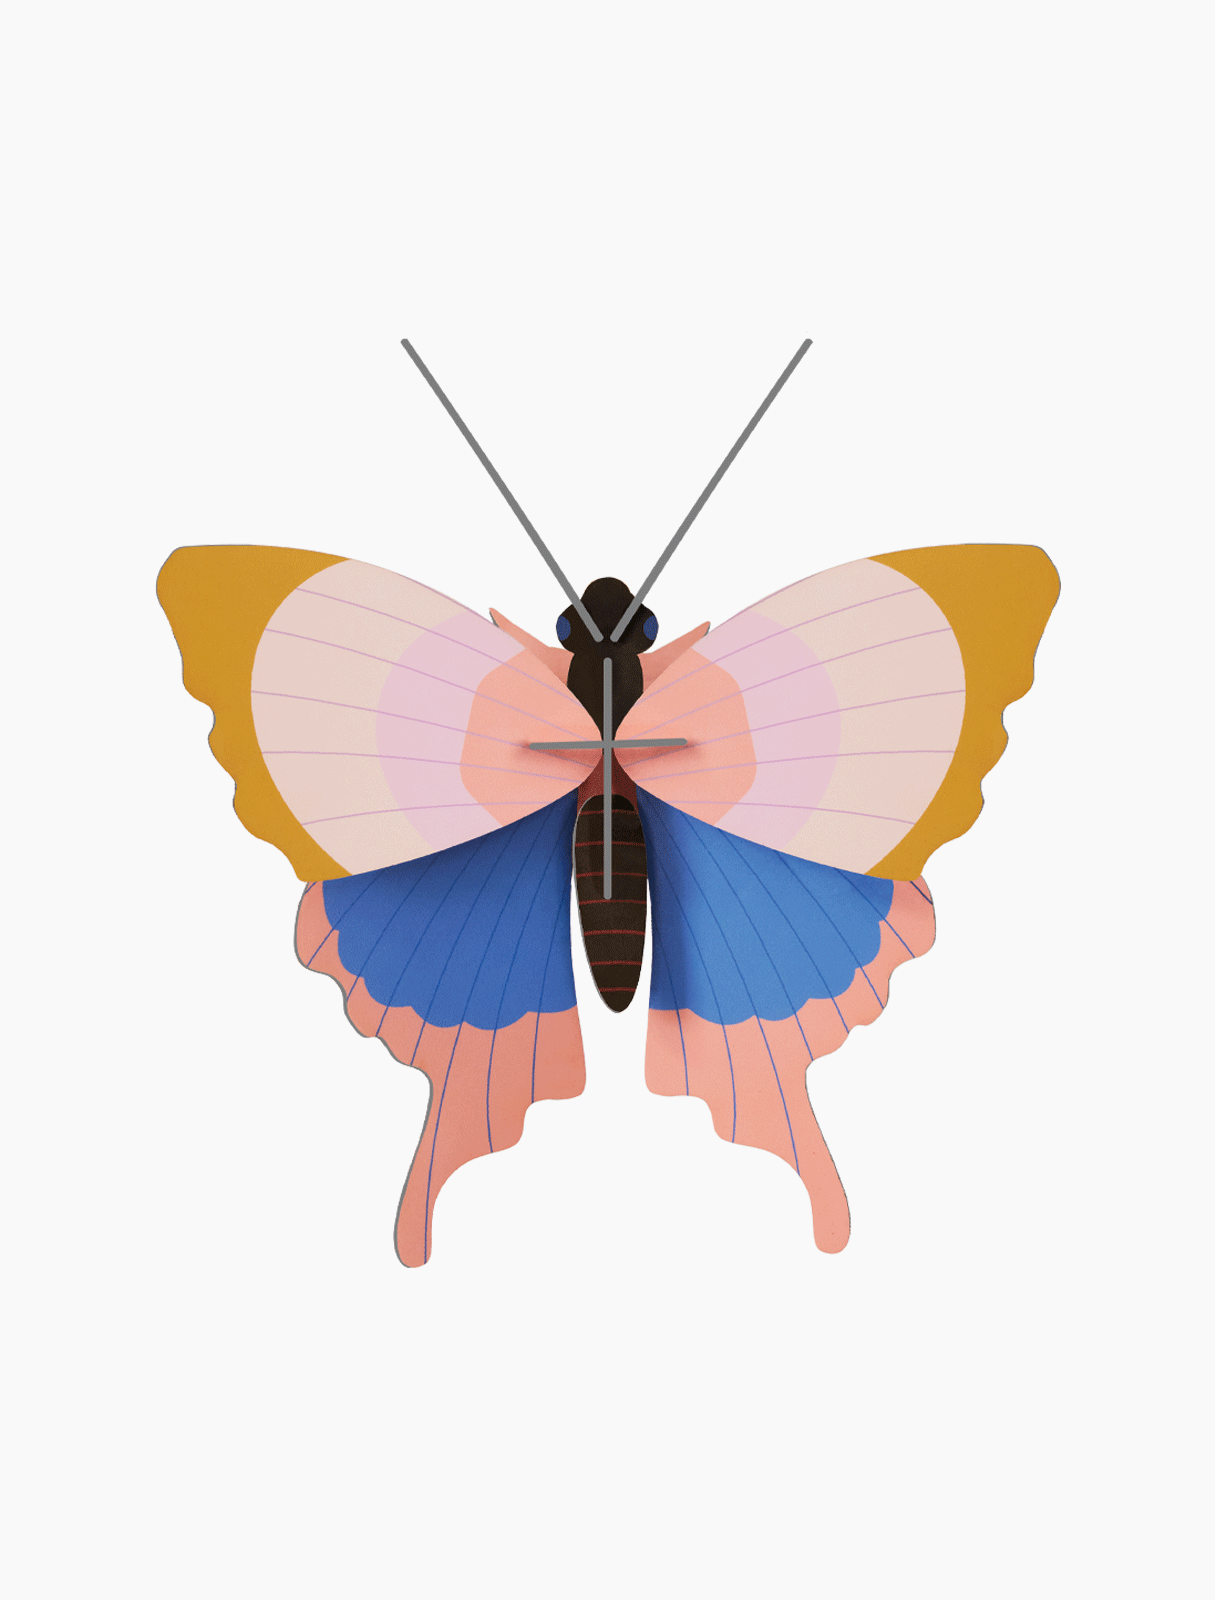 Gold Rim Butterfly